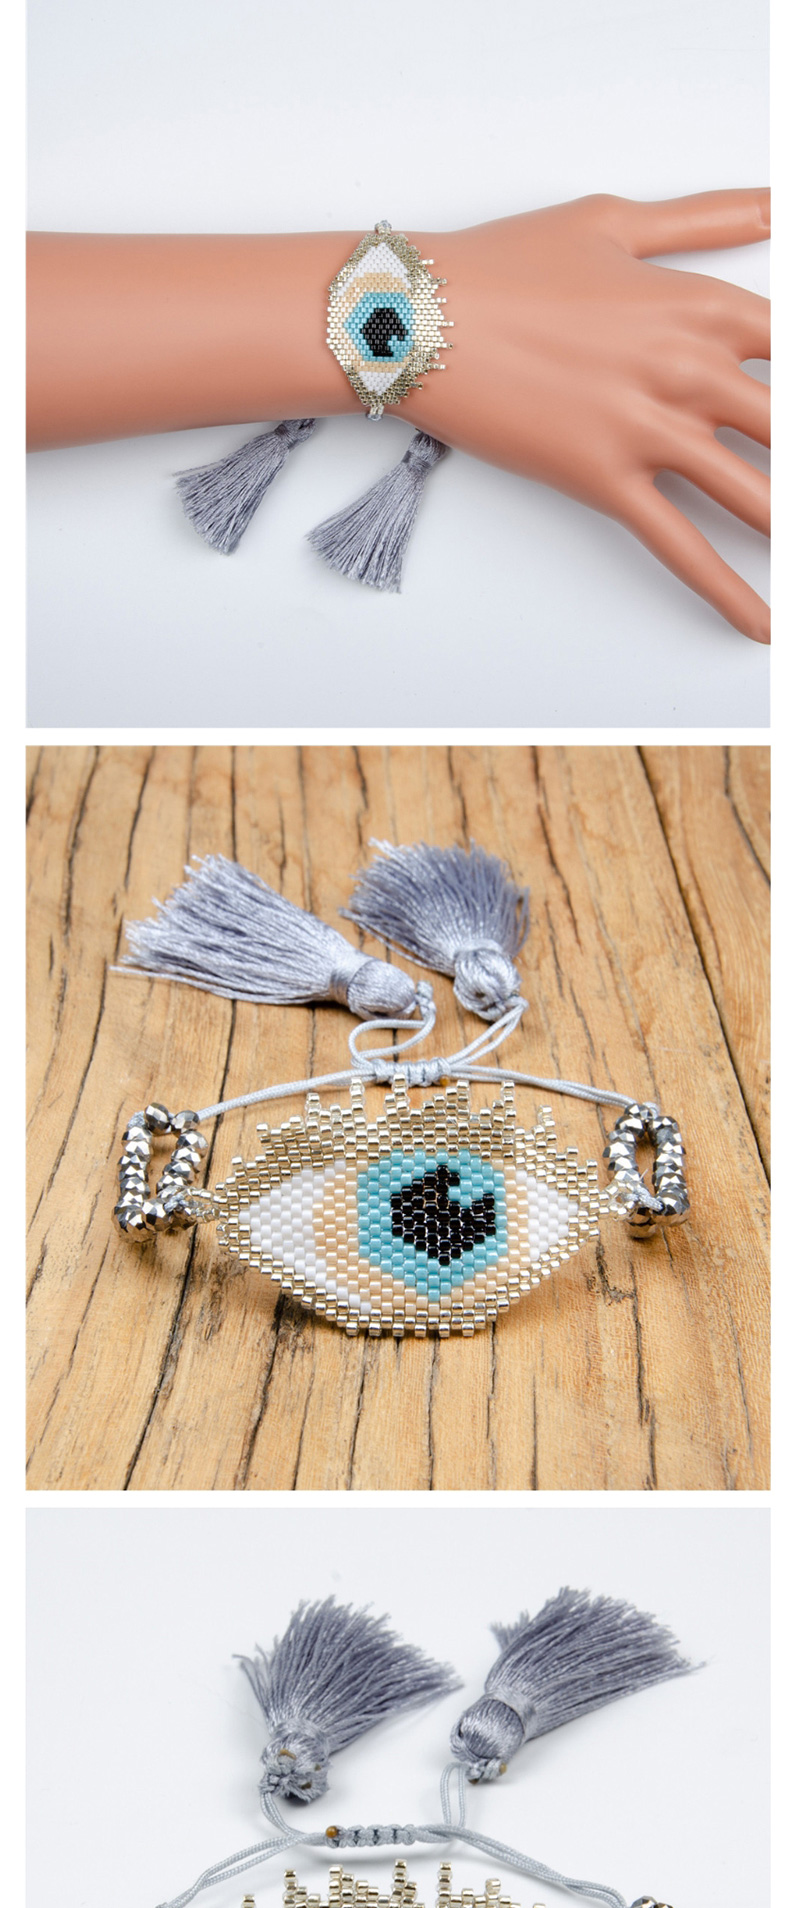 Fashion Royal Blue Rice Beads Woven Eye Crystal Tassel Bracelet,Beaded Bracelet